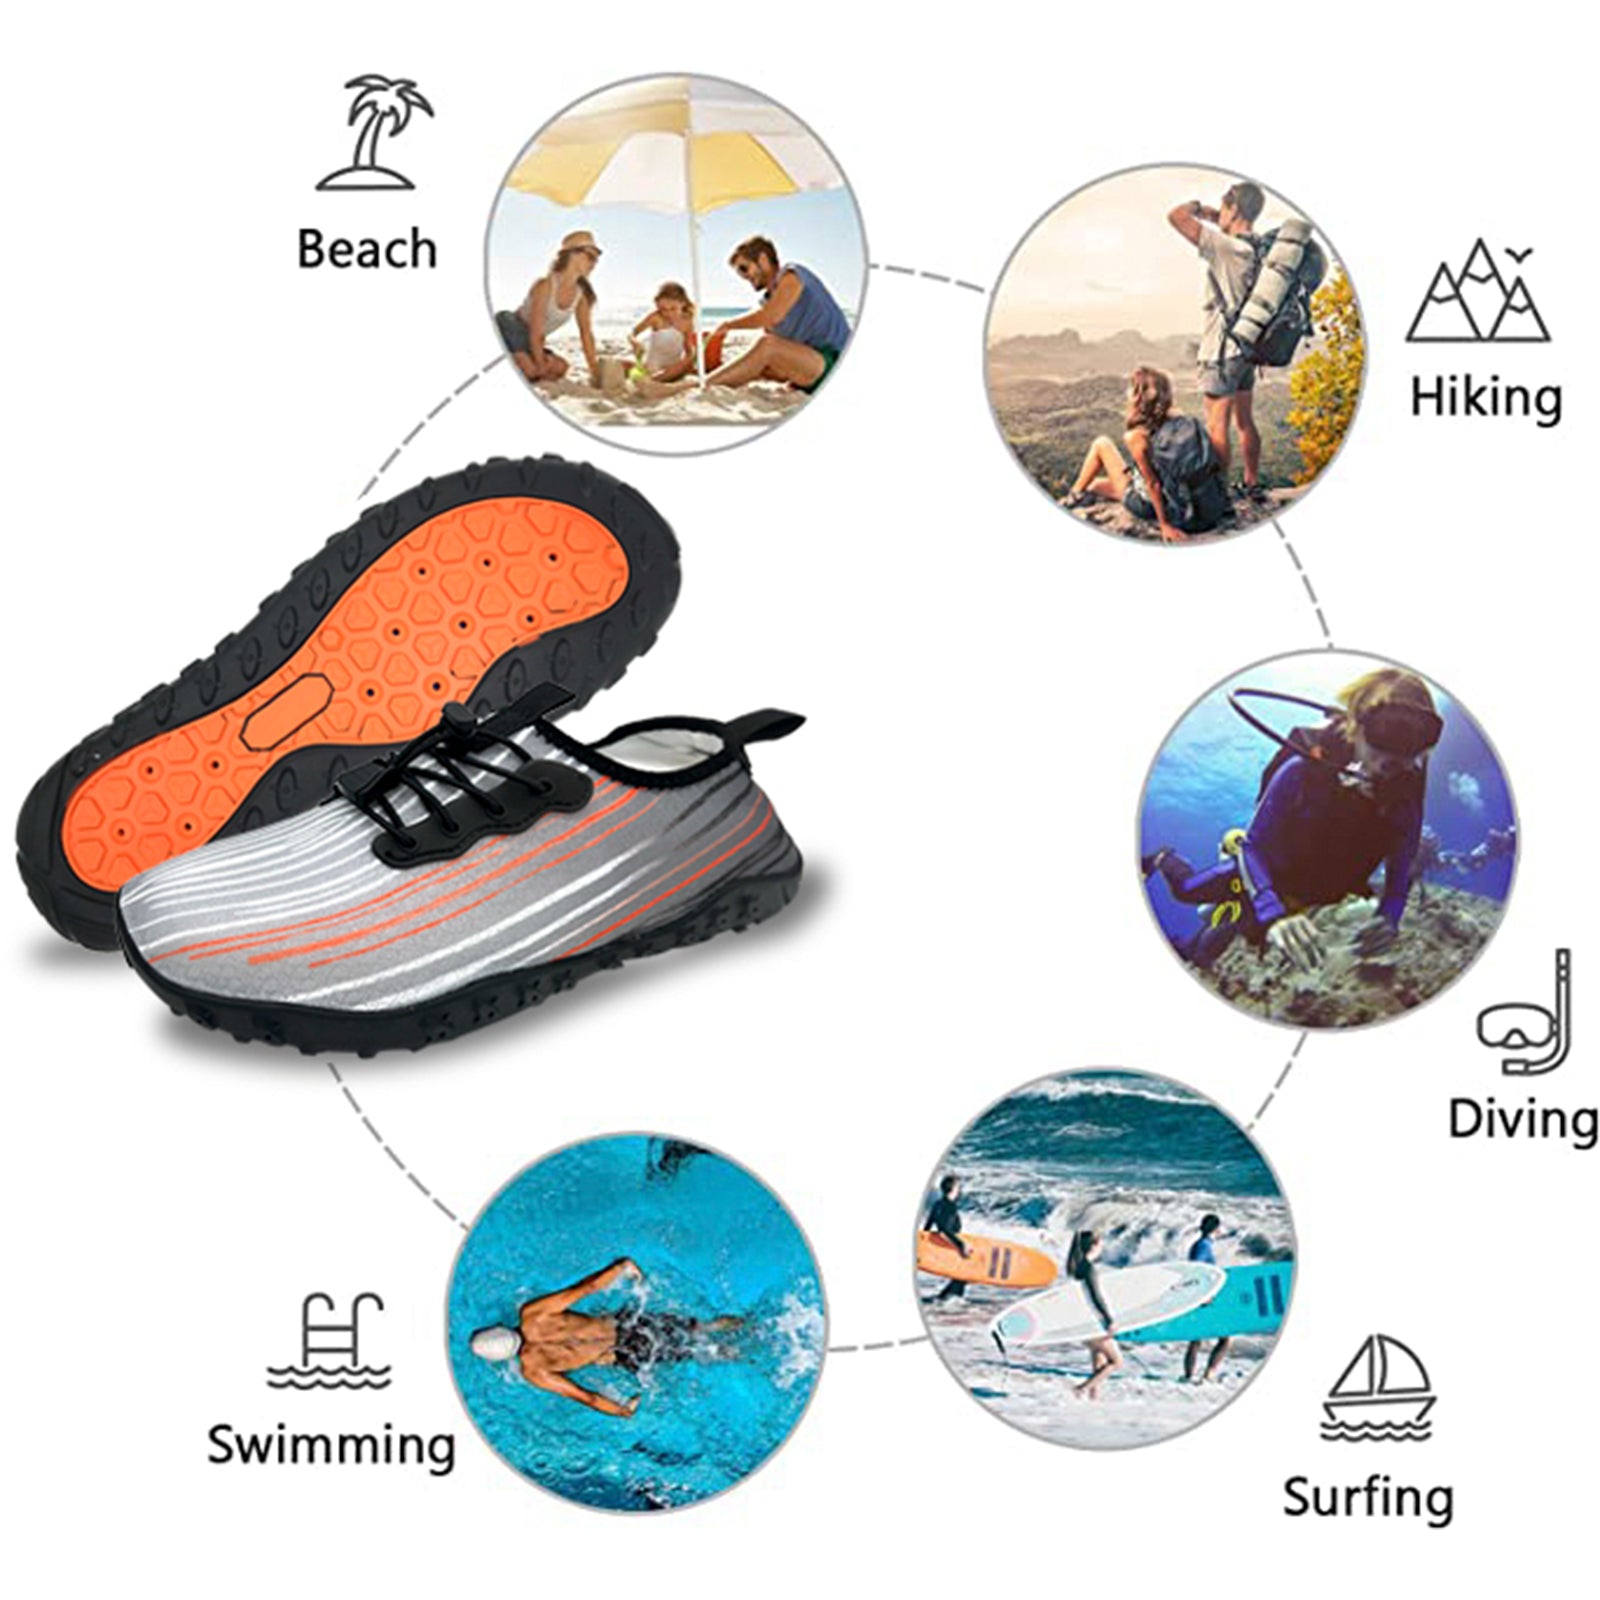 Water Shoes for Men and Women Soft Breathable Slip-on Aqua Shoes Aqua Socks for Swim Beach Pool Surf Yoga (Grey Size US 7)